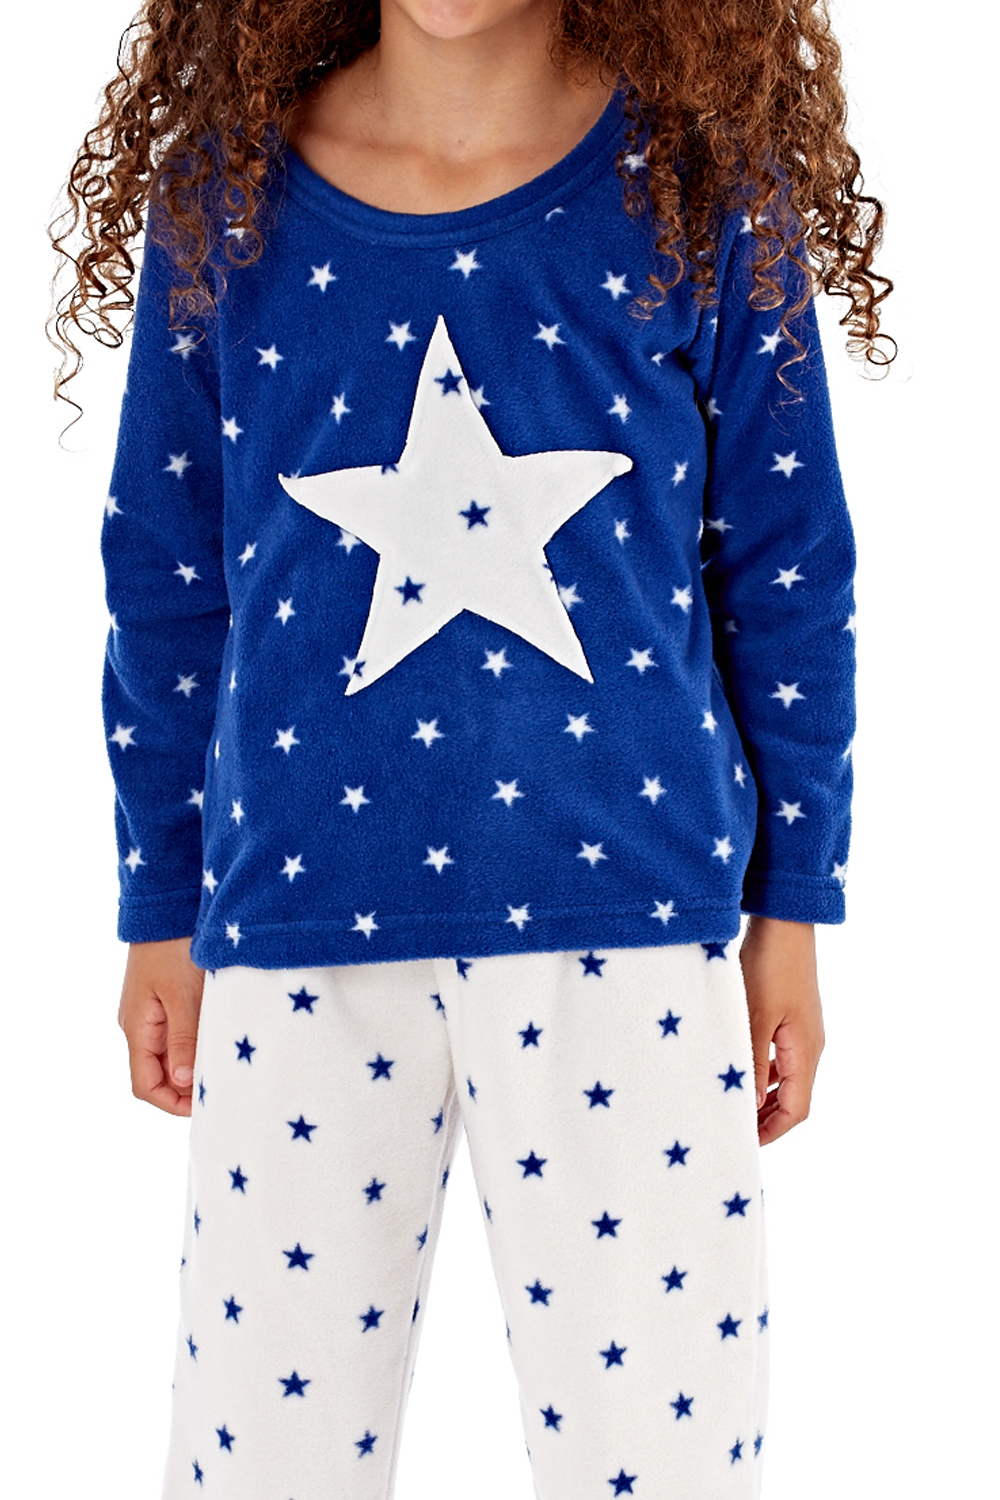 Selena Secrets Girls Luxury Soft Stella Star Print Pyjamas Kids Top /& Bottoms